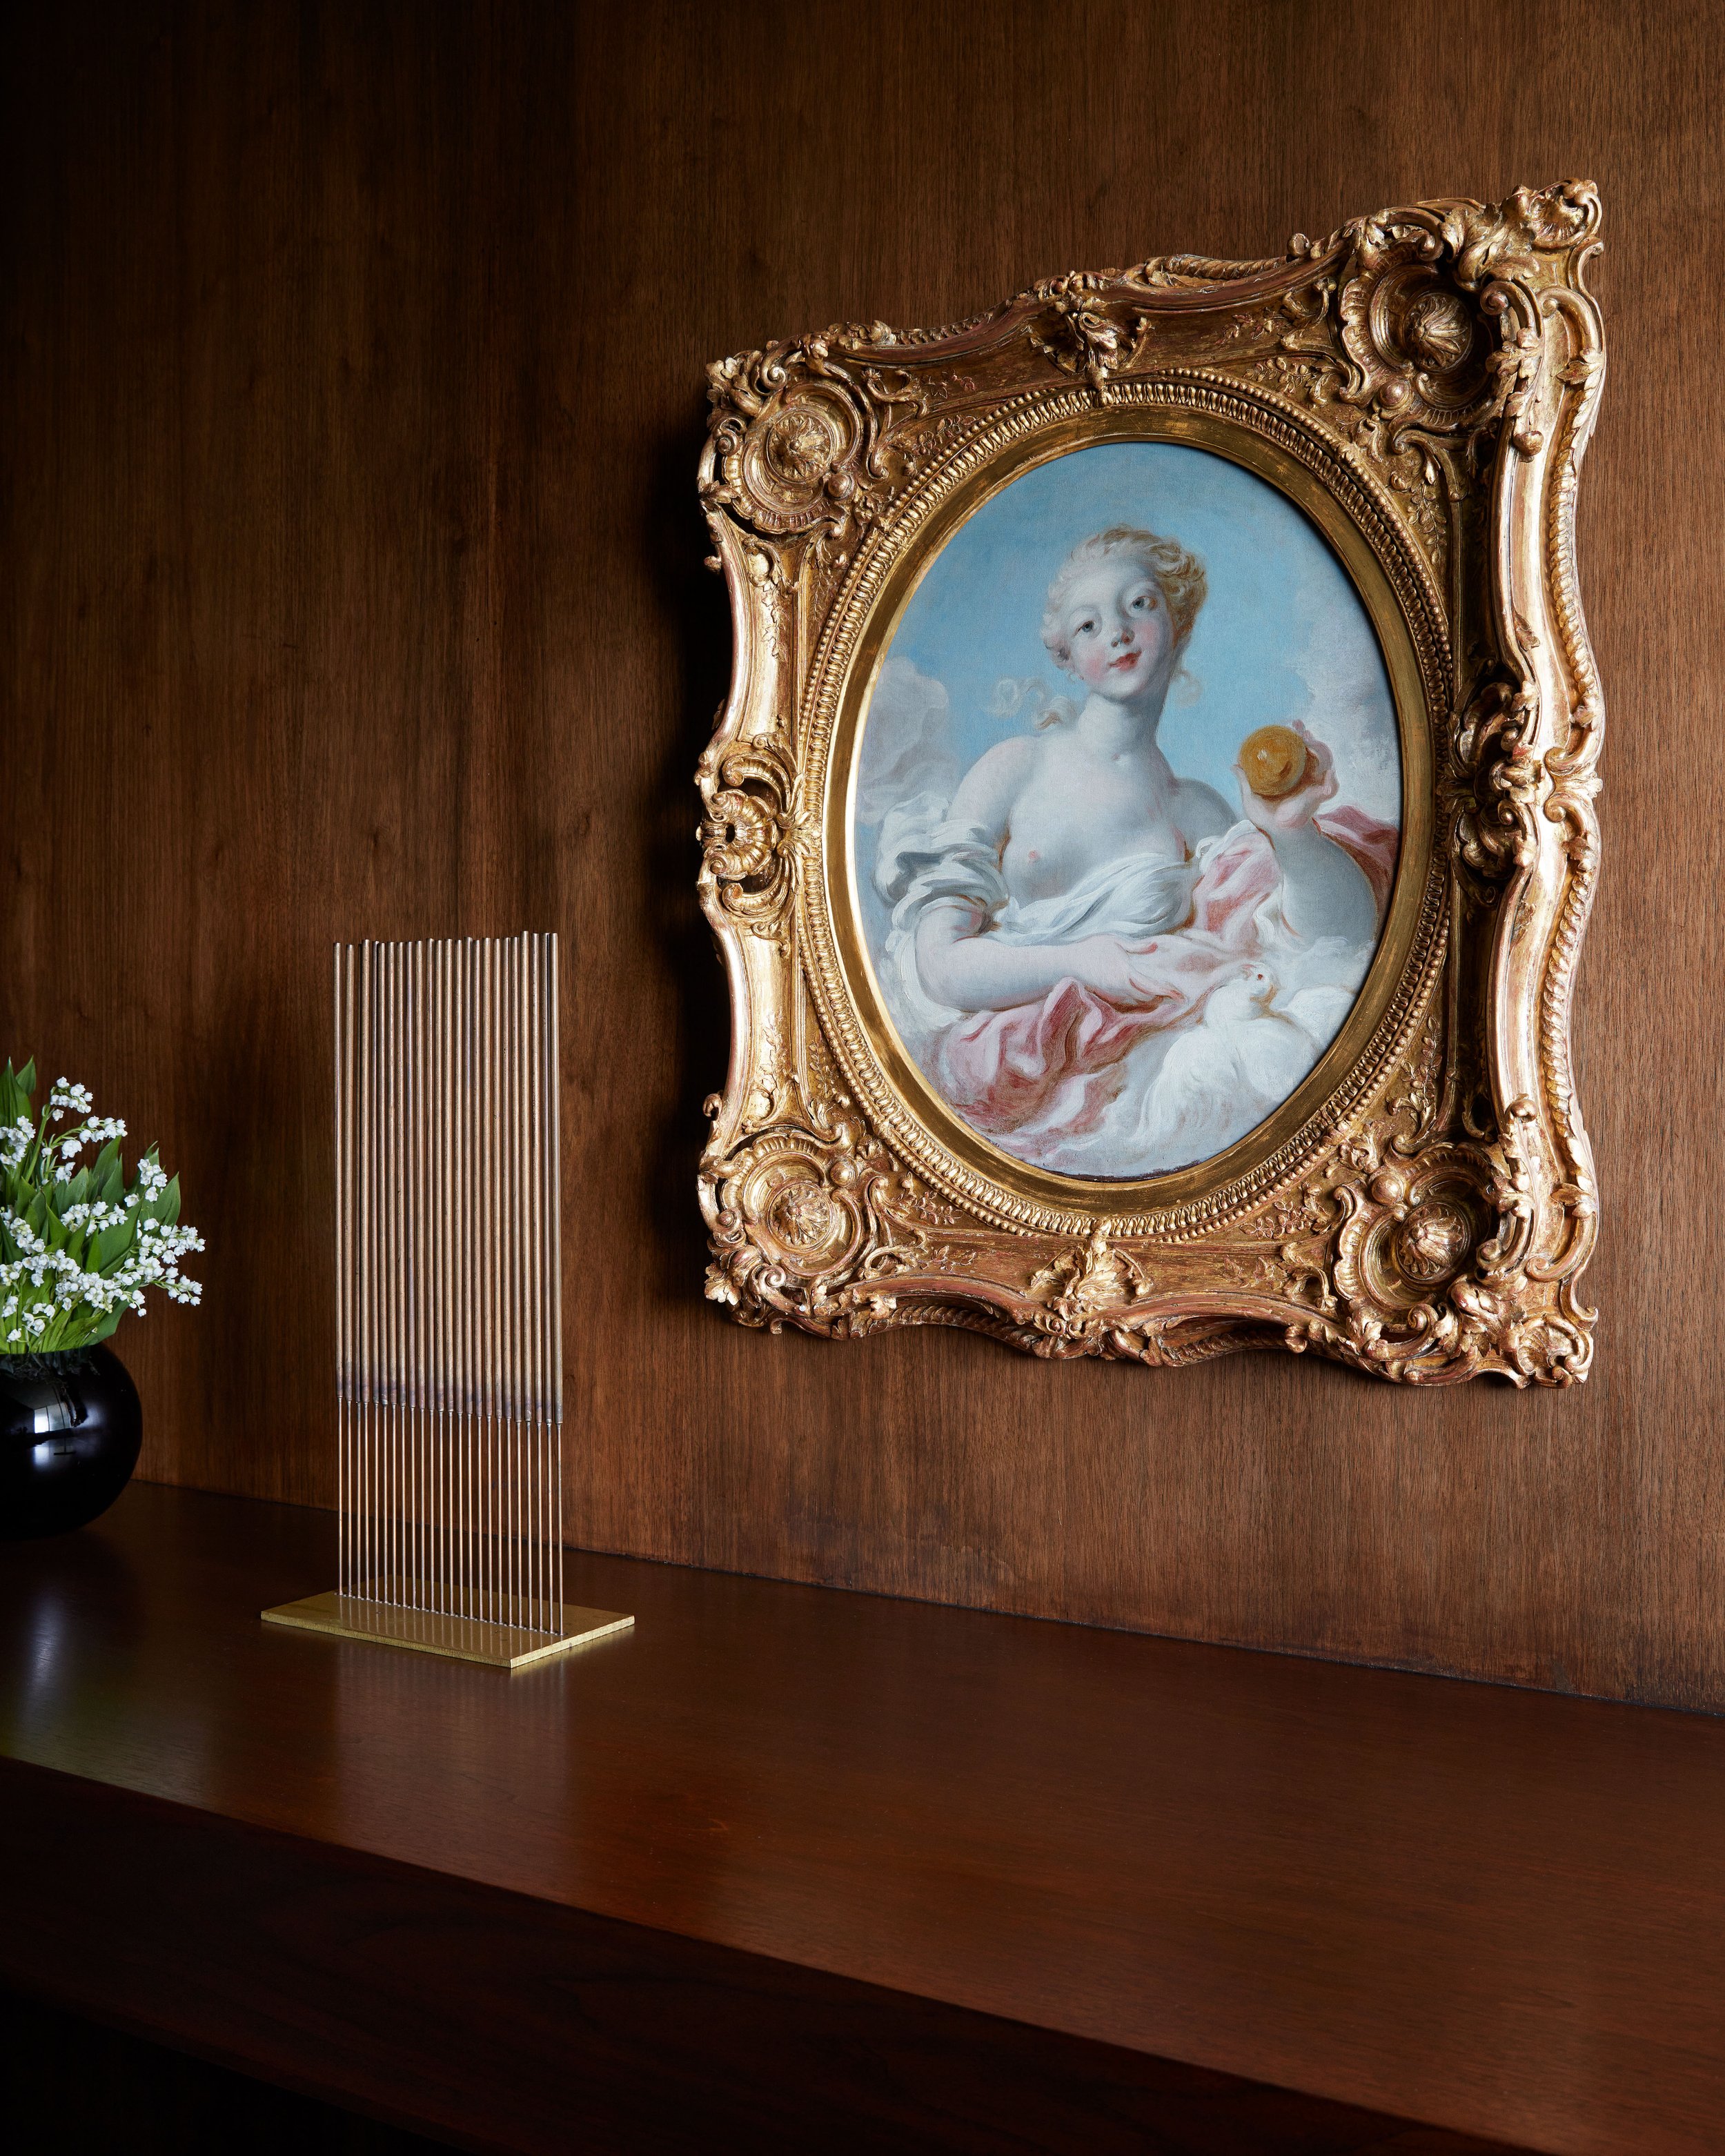  Jean-Honoré&nbsp;Fragonard,  Portrait said to be Mademoiselle Marie-Catherine Colombe as Venus , n.d. Richard Neutra's Brown House, Los Angeles 